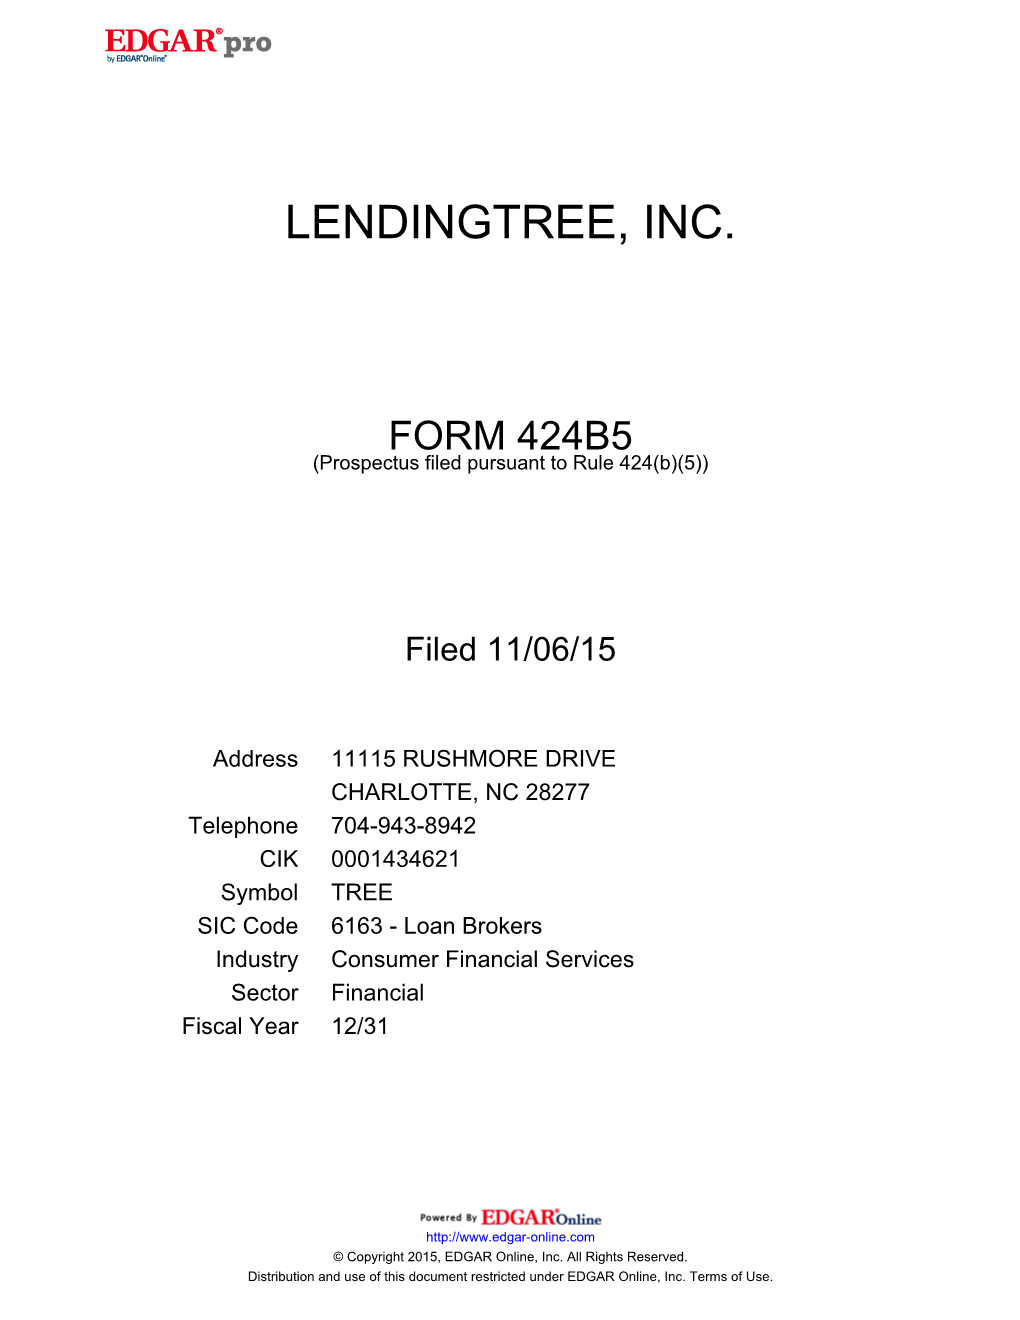 Lendingtree, Inc